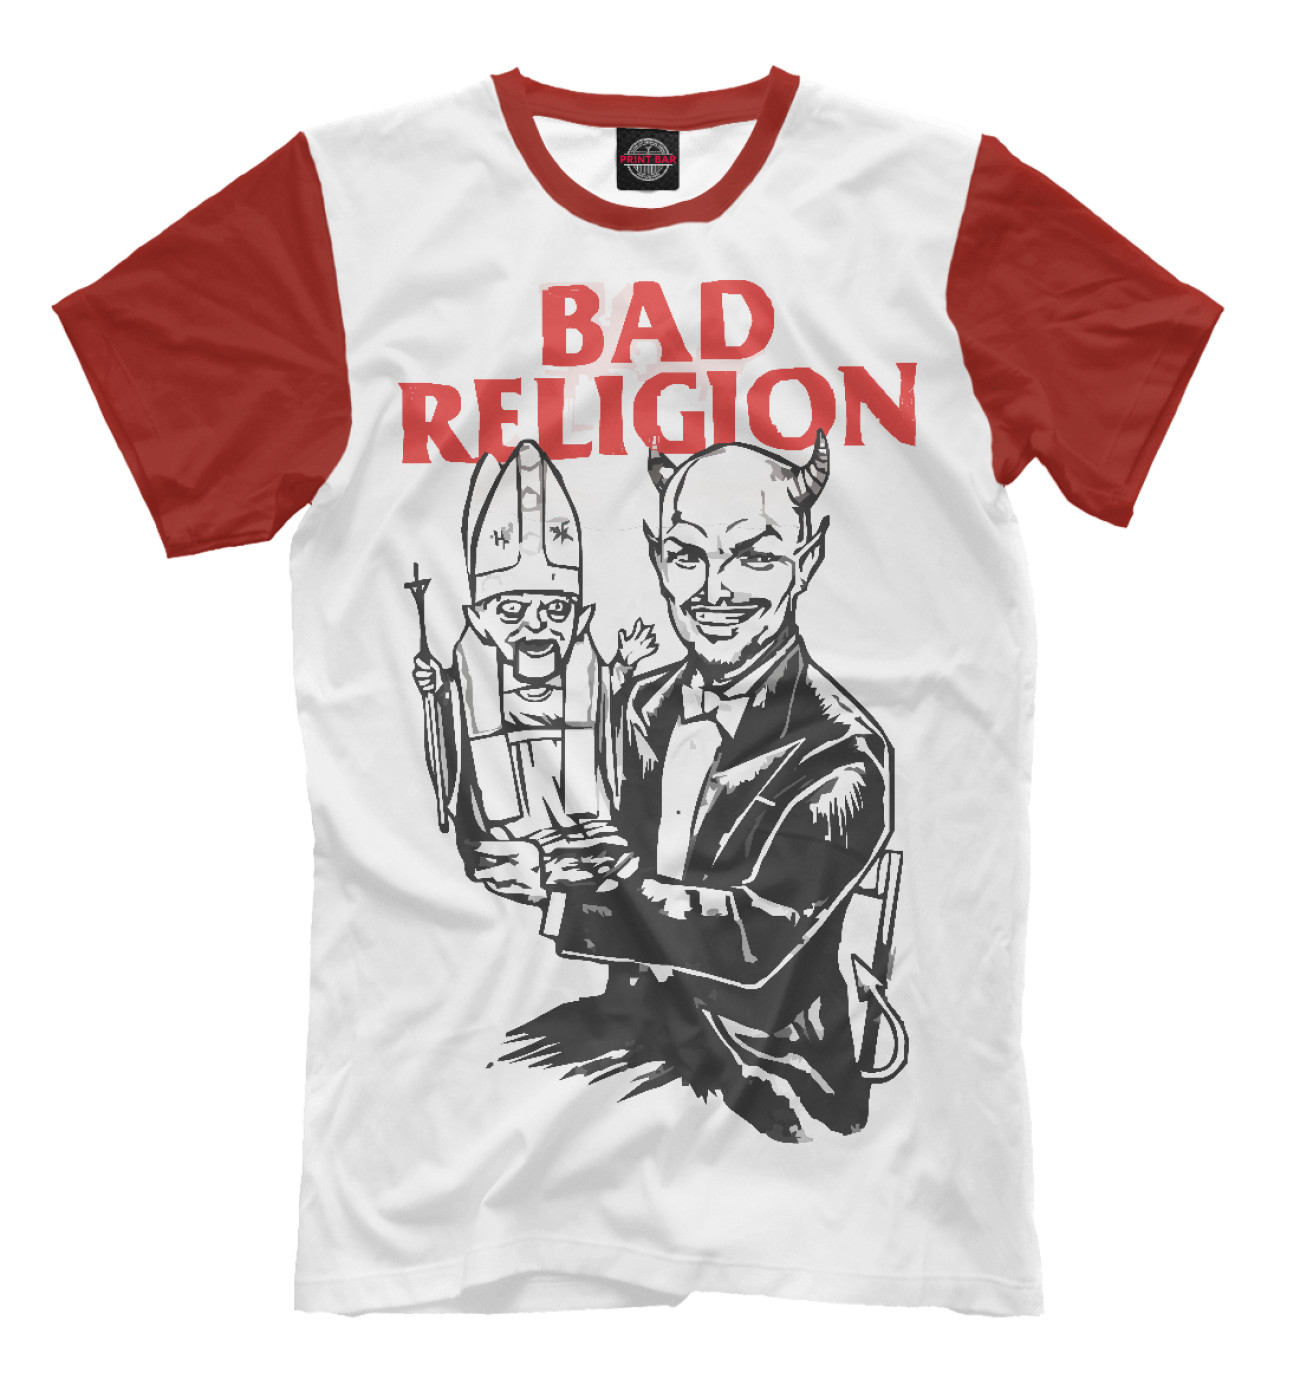 Мужская Футболка Bad Religion, артикул: BRL-487005-fut-2